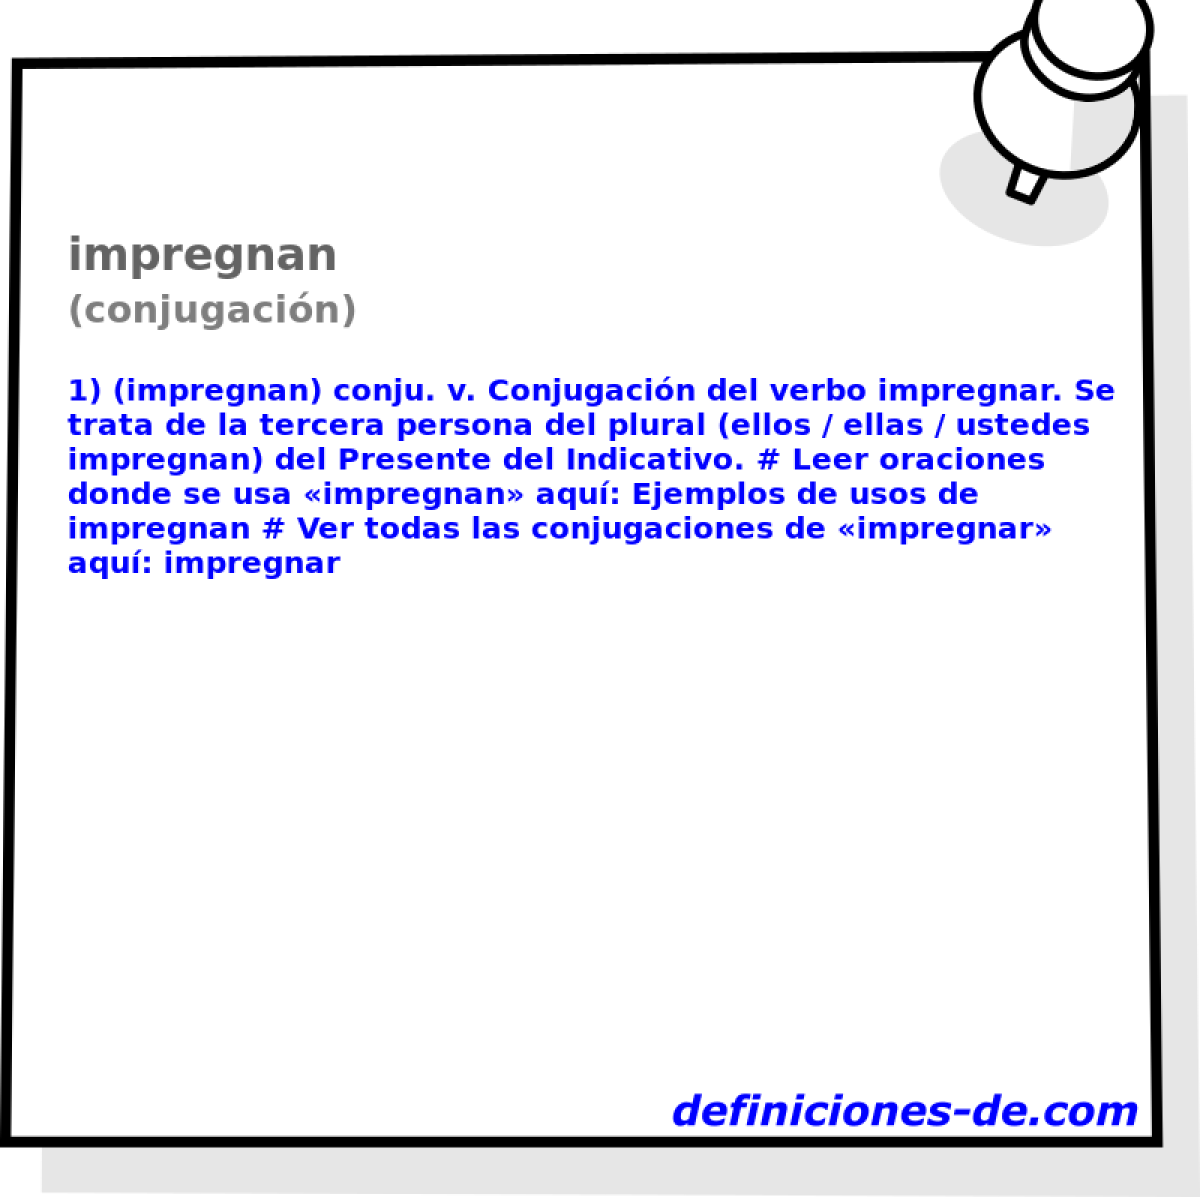 impregnan (conjugacin)